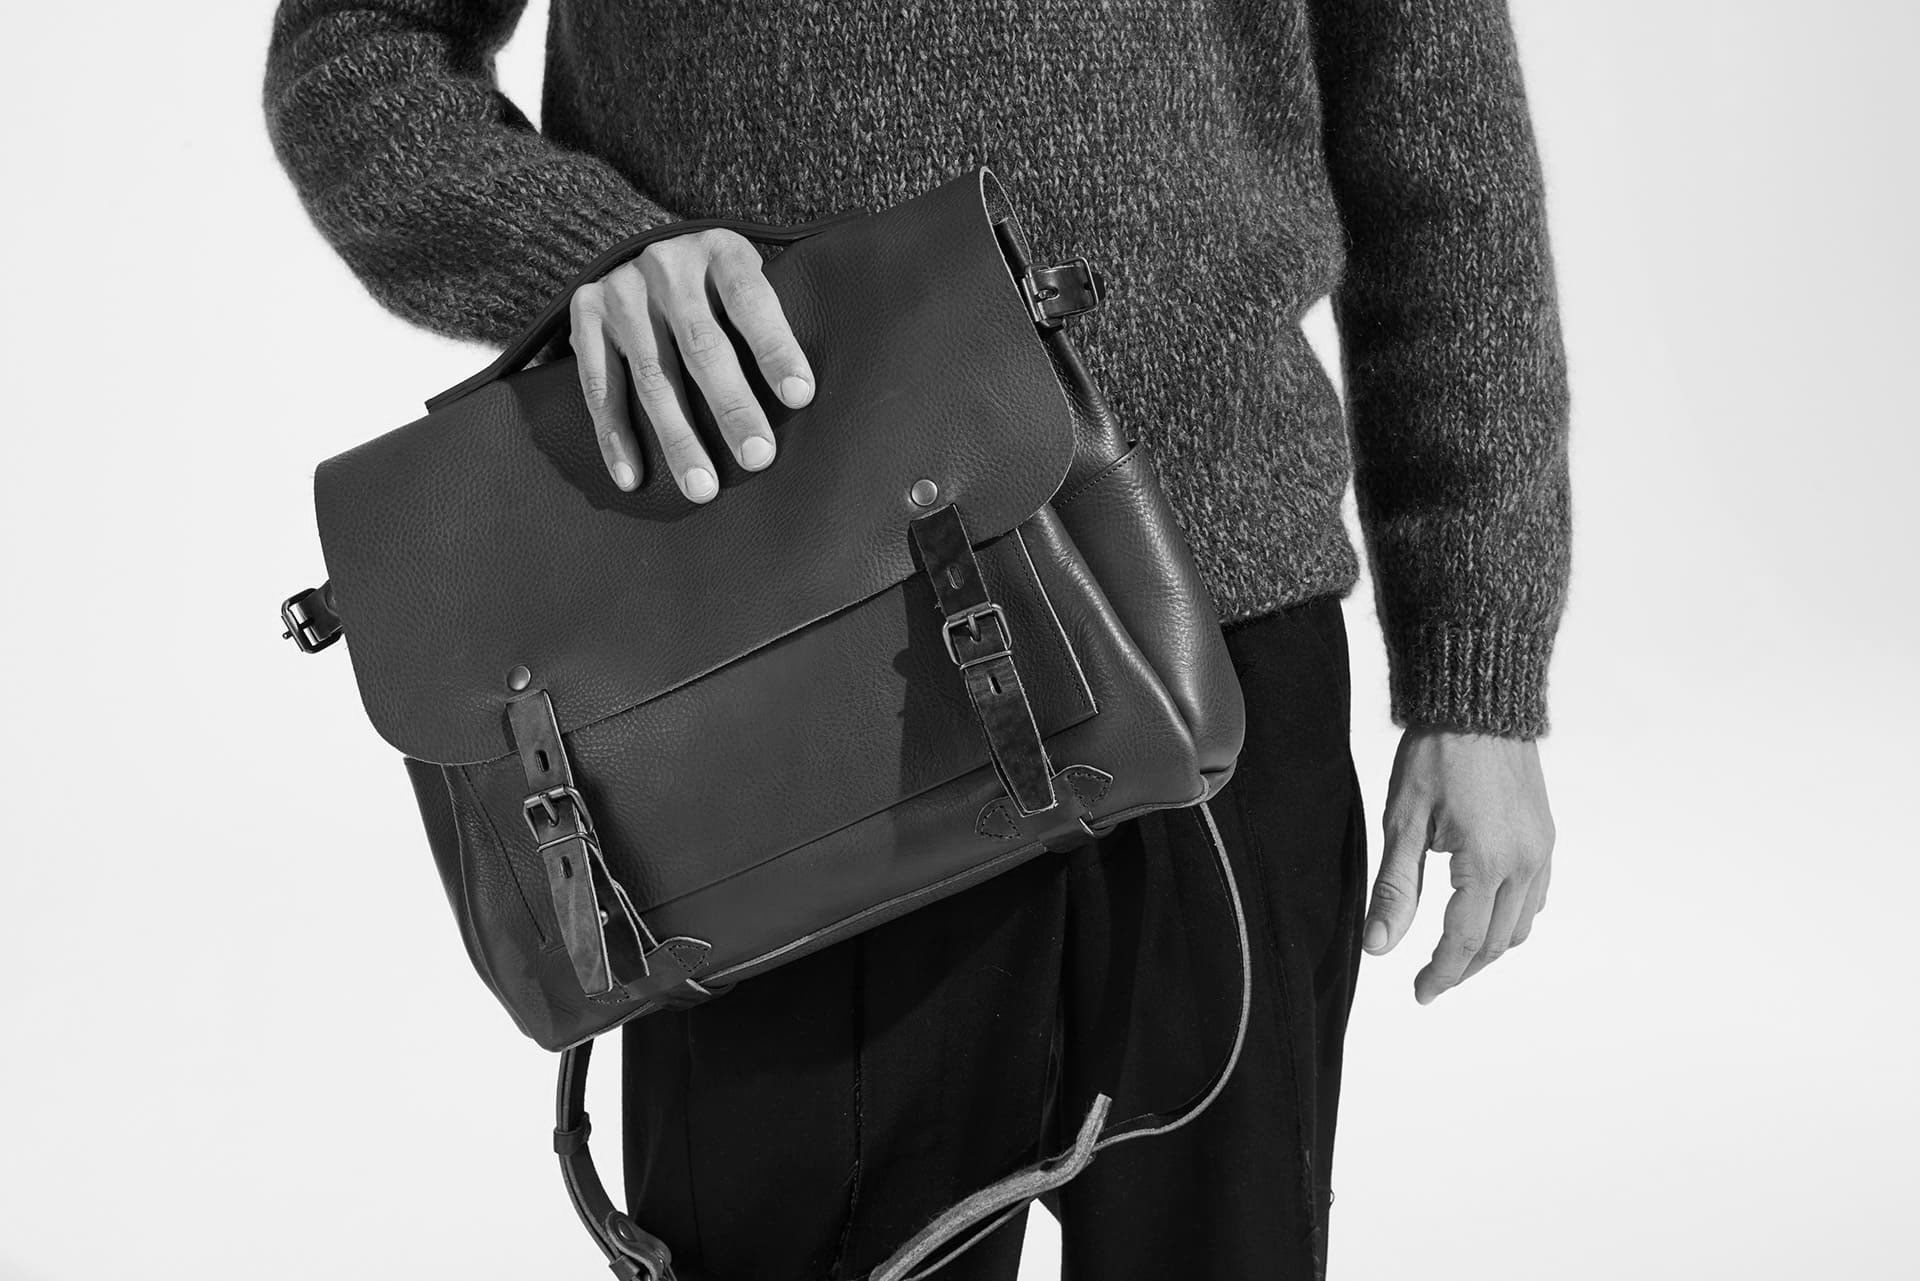 Men's Laptop Bags | Leather Briefcase - Made in France | Bleu de chauffe